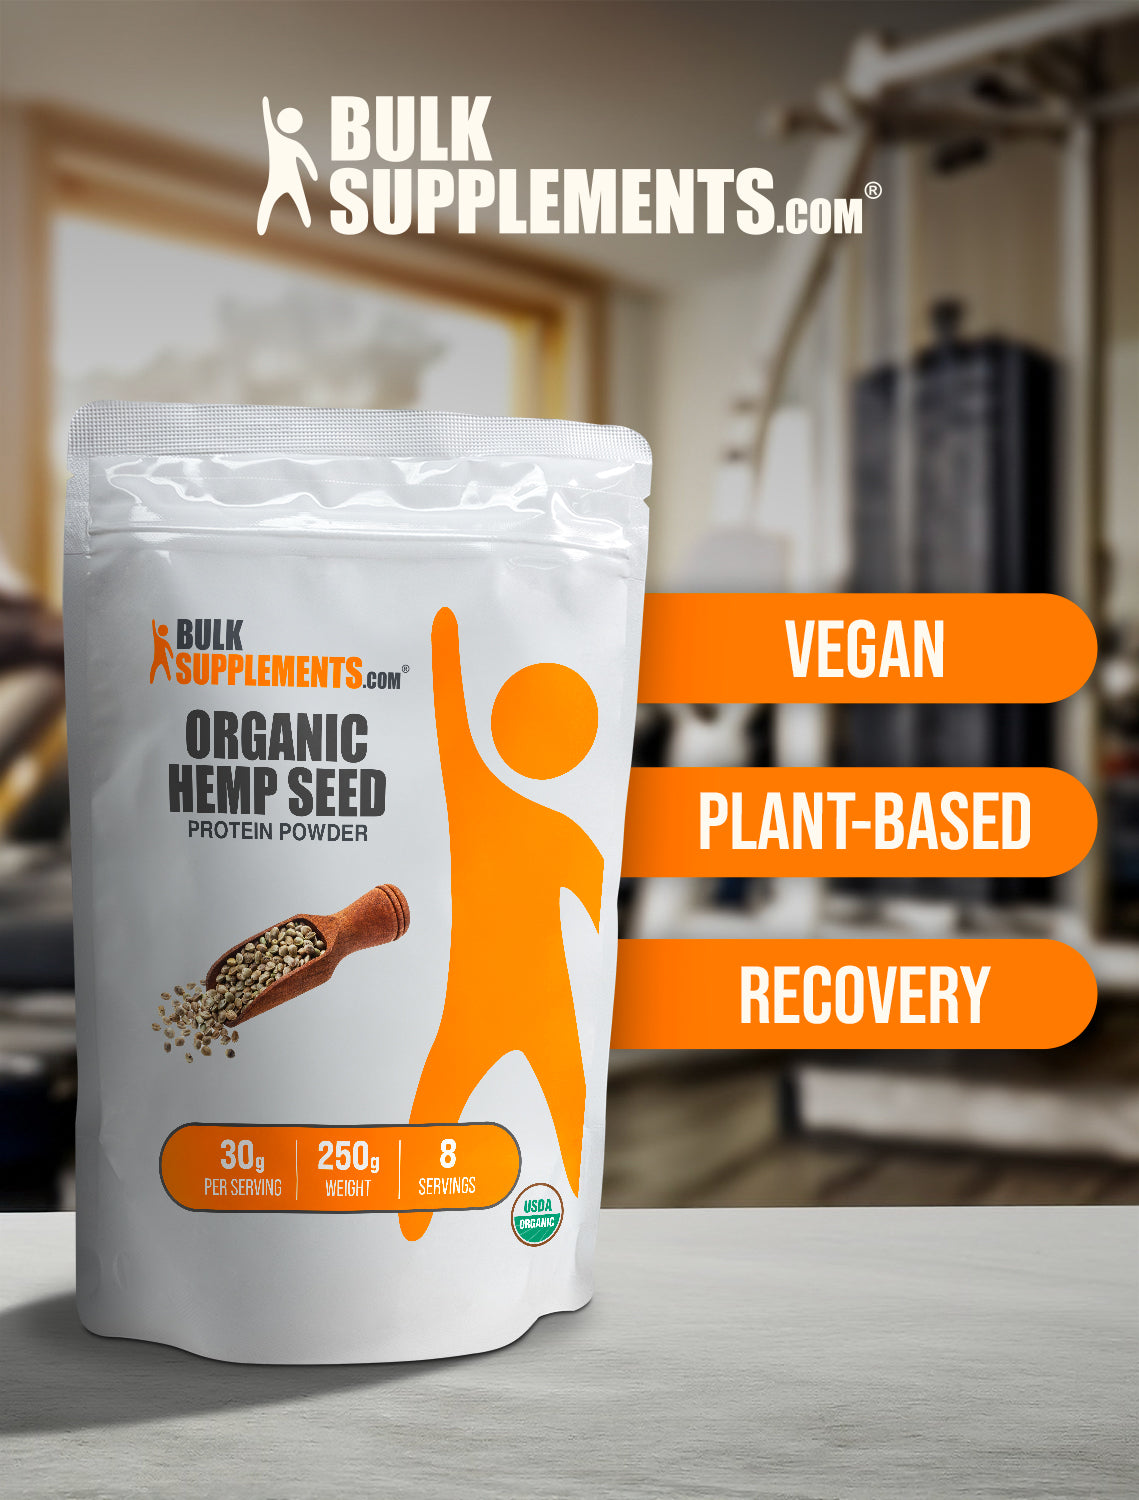 Organic hemp seed protein powder keyword image 250g